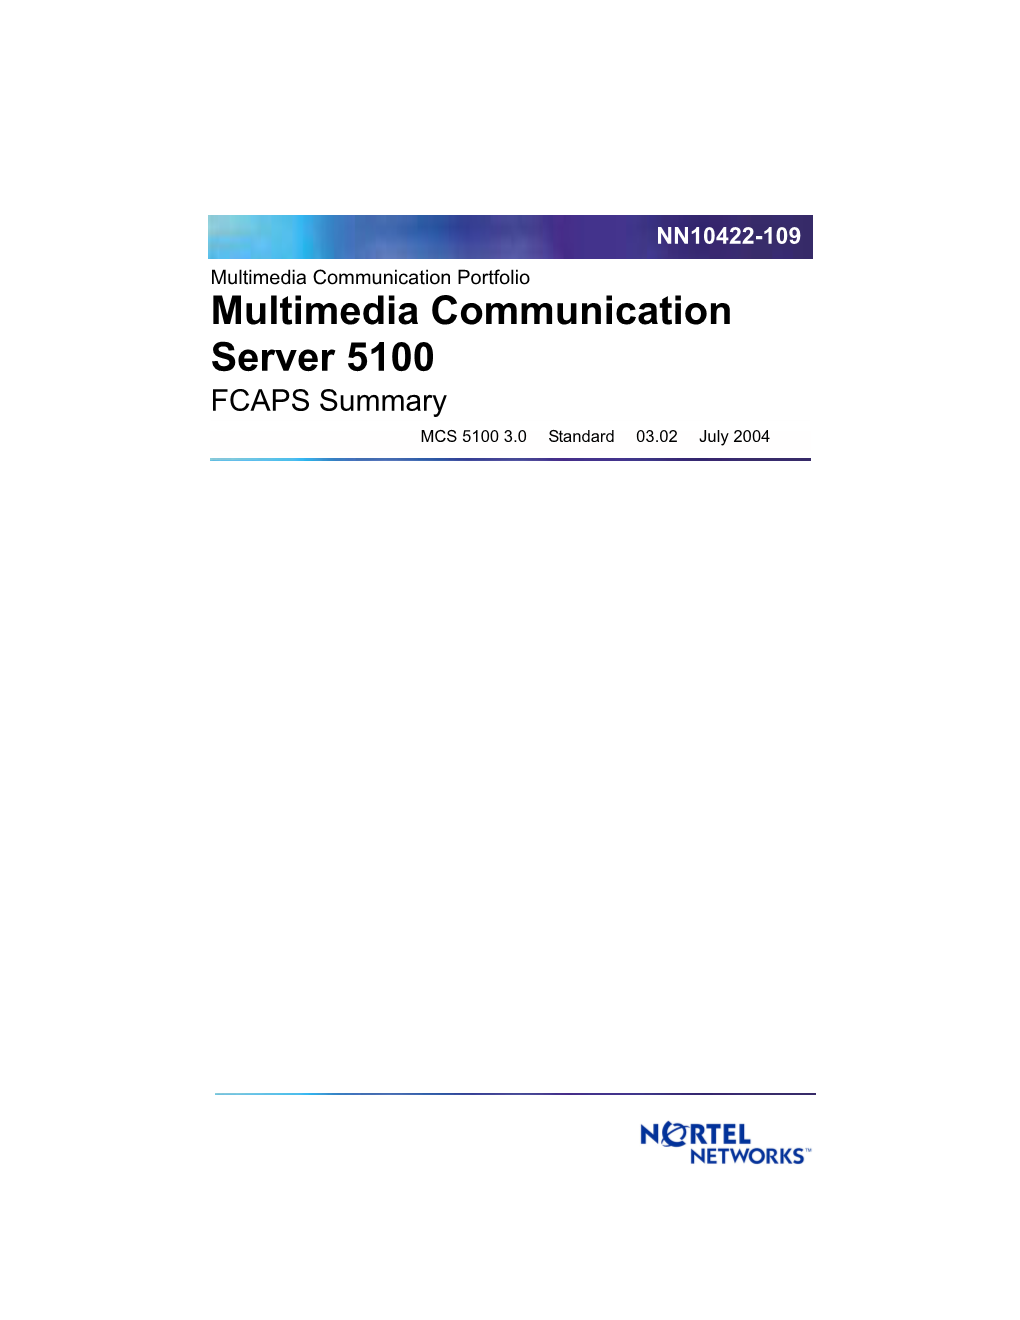 MCS 5100 FCAPS Summary